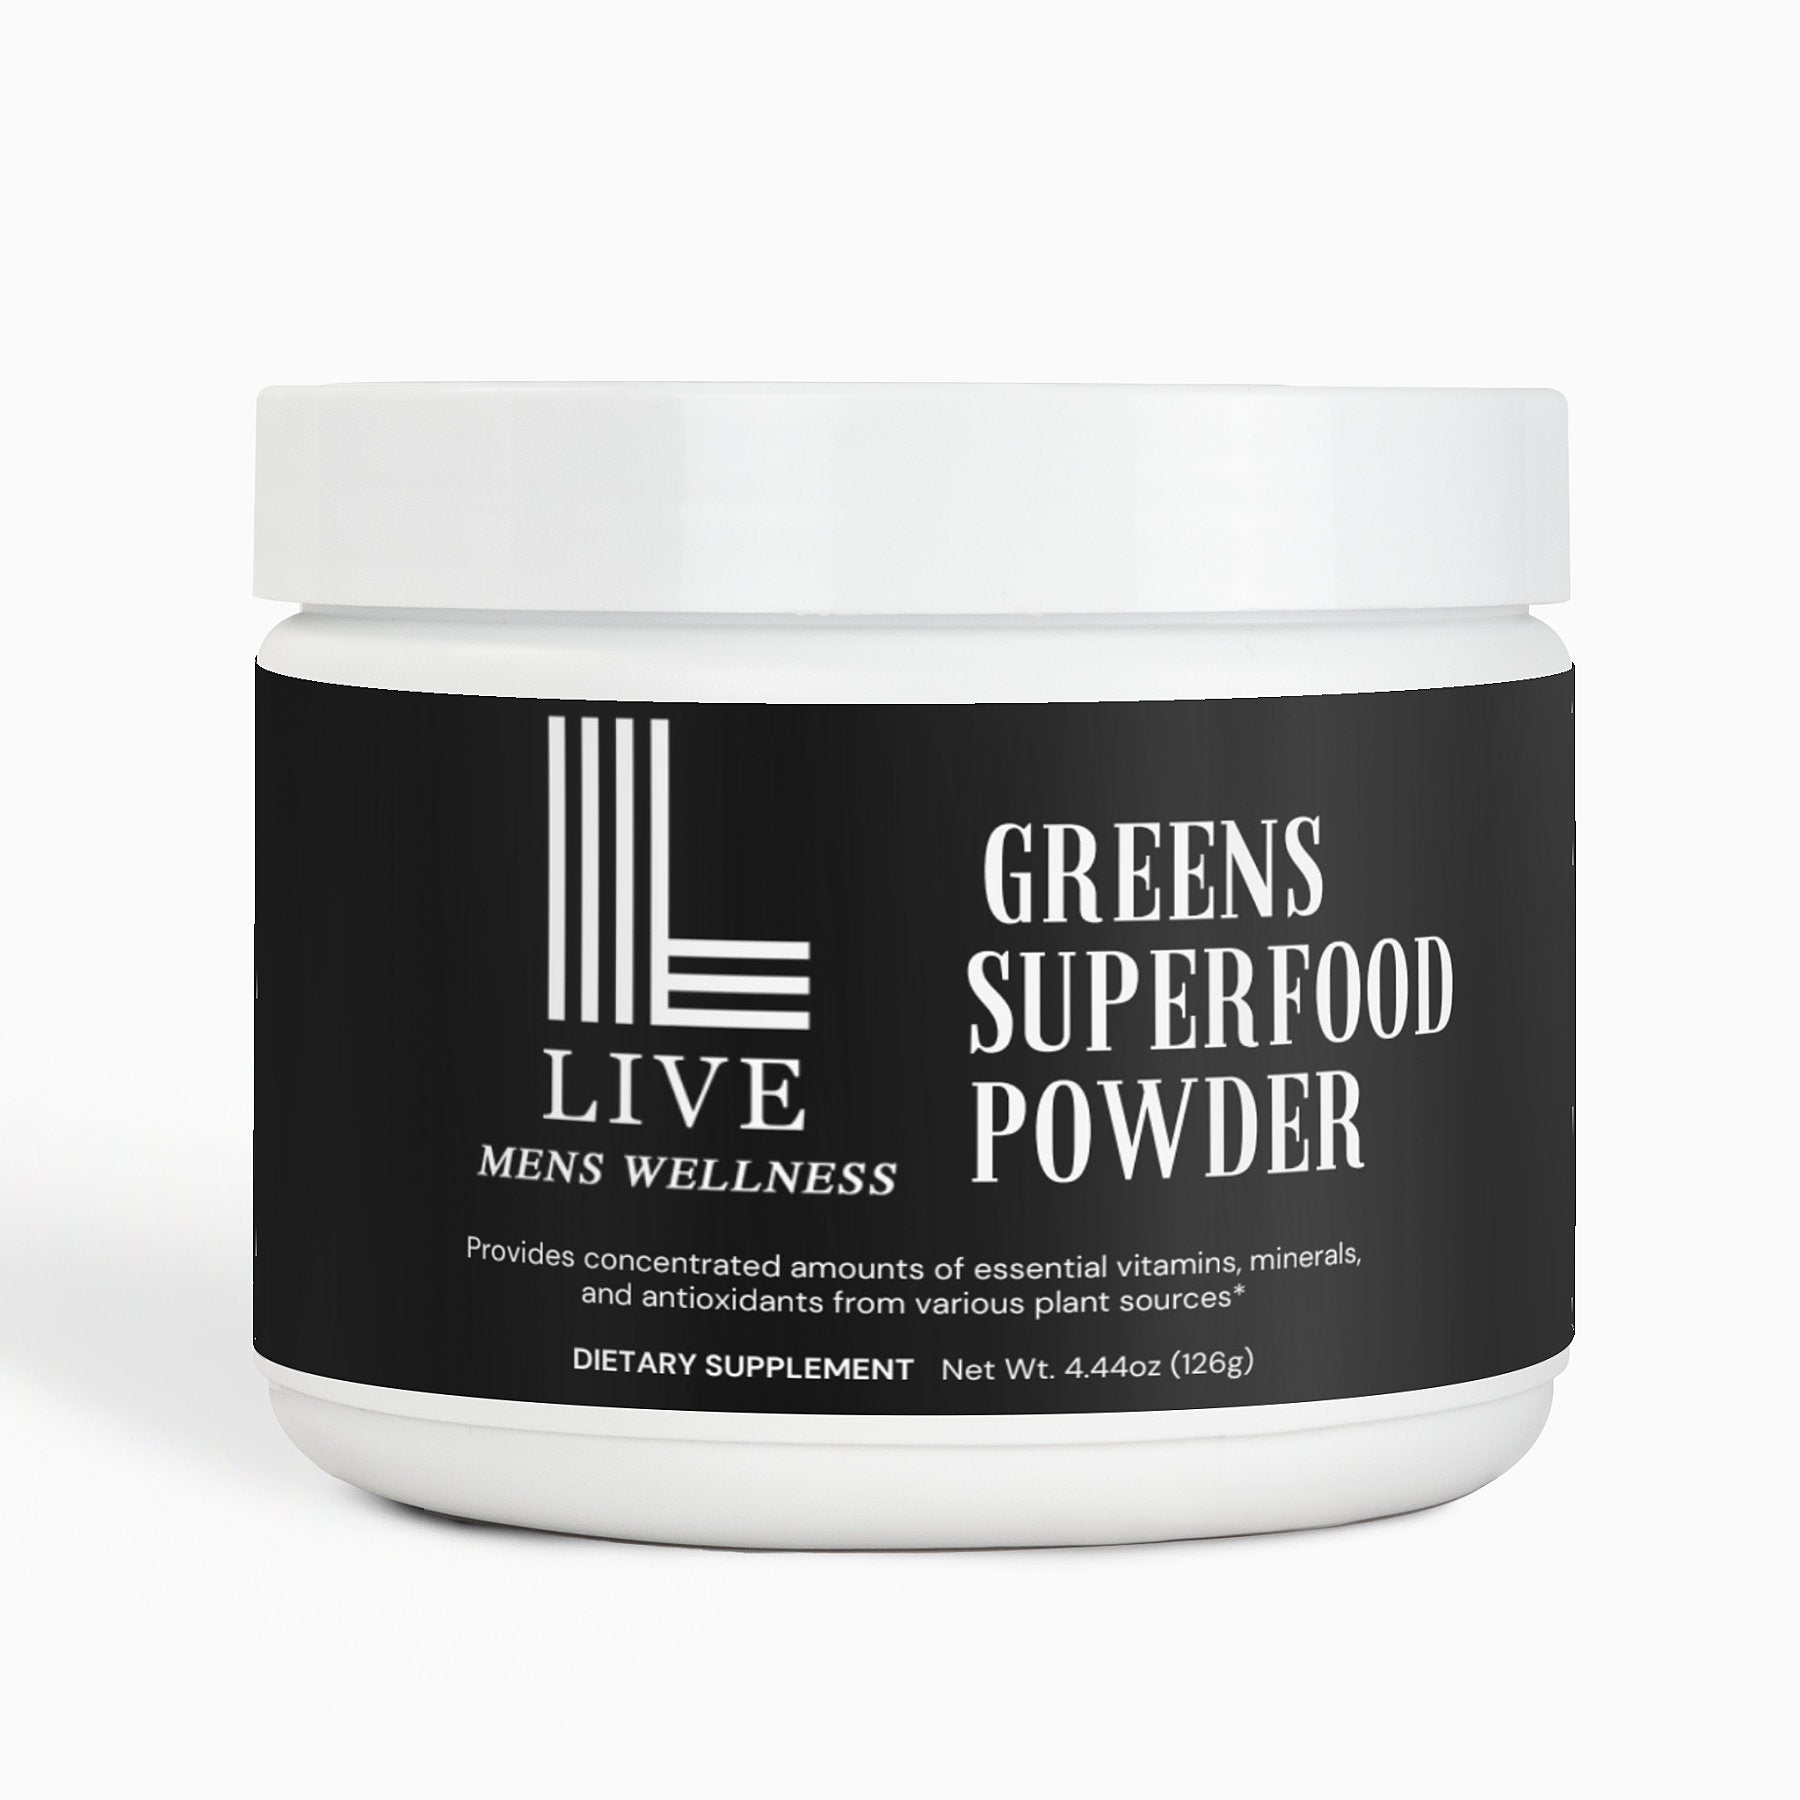 GREENS - Superfood Powder - Live Mens Wellness